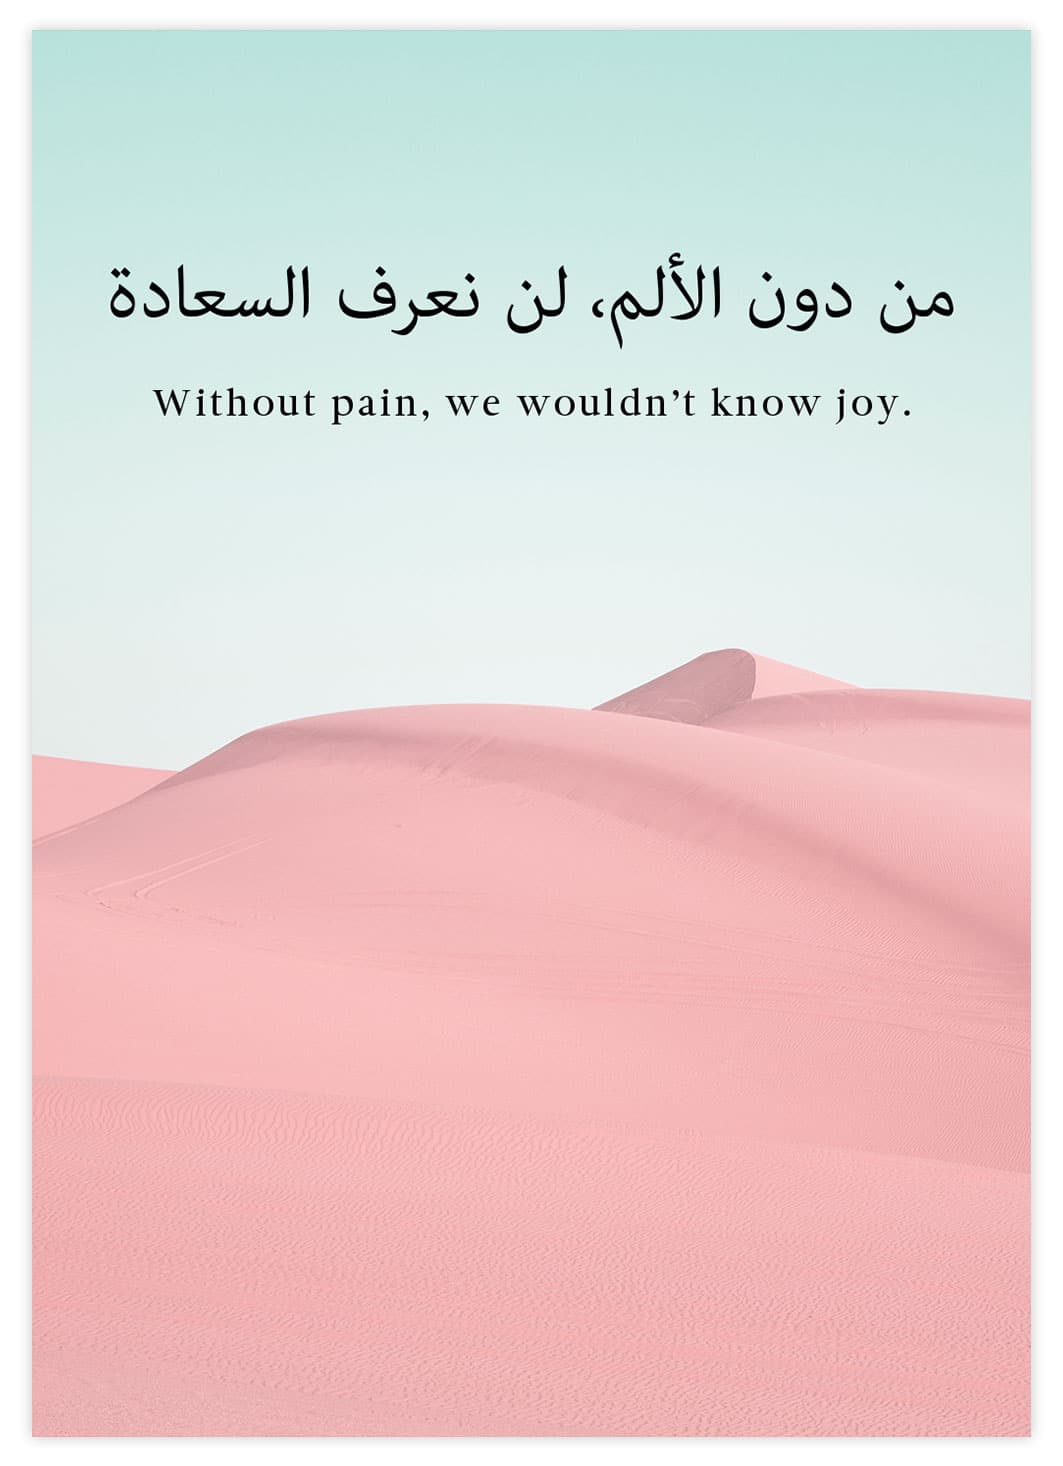 Pain&Joy Arabisches Poster